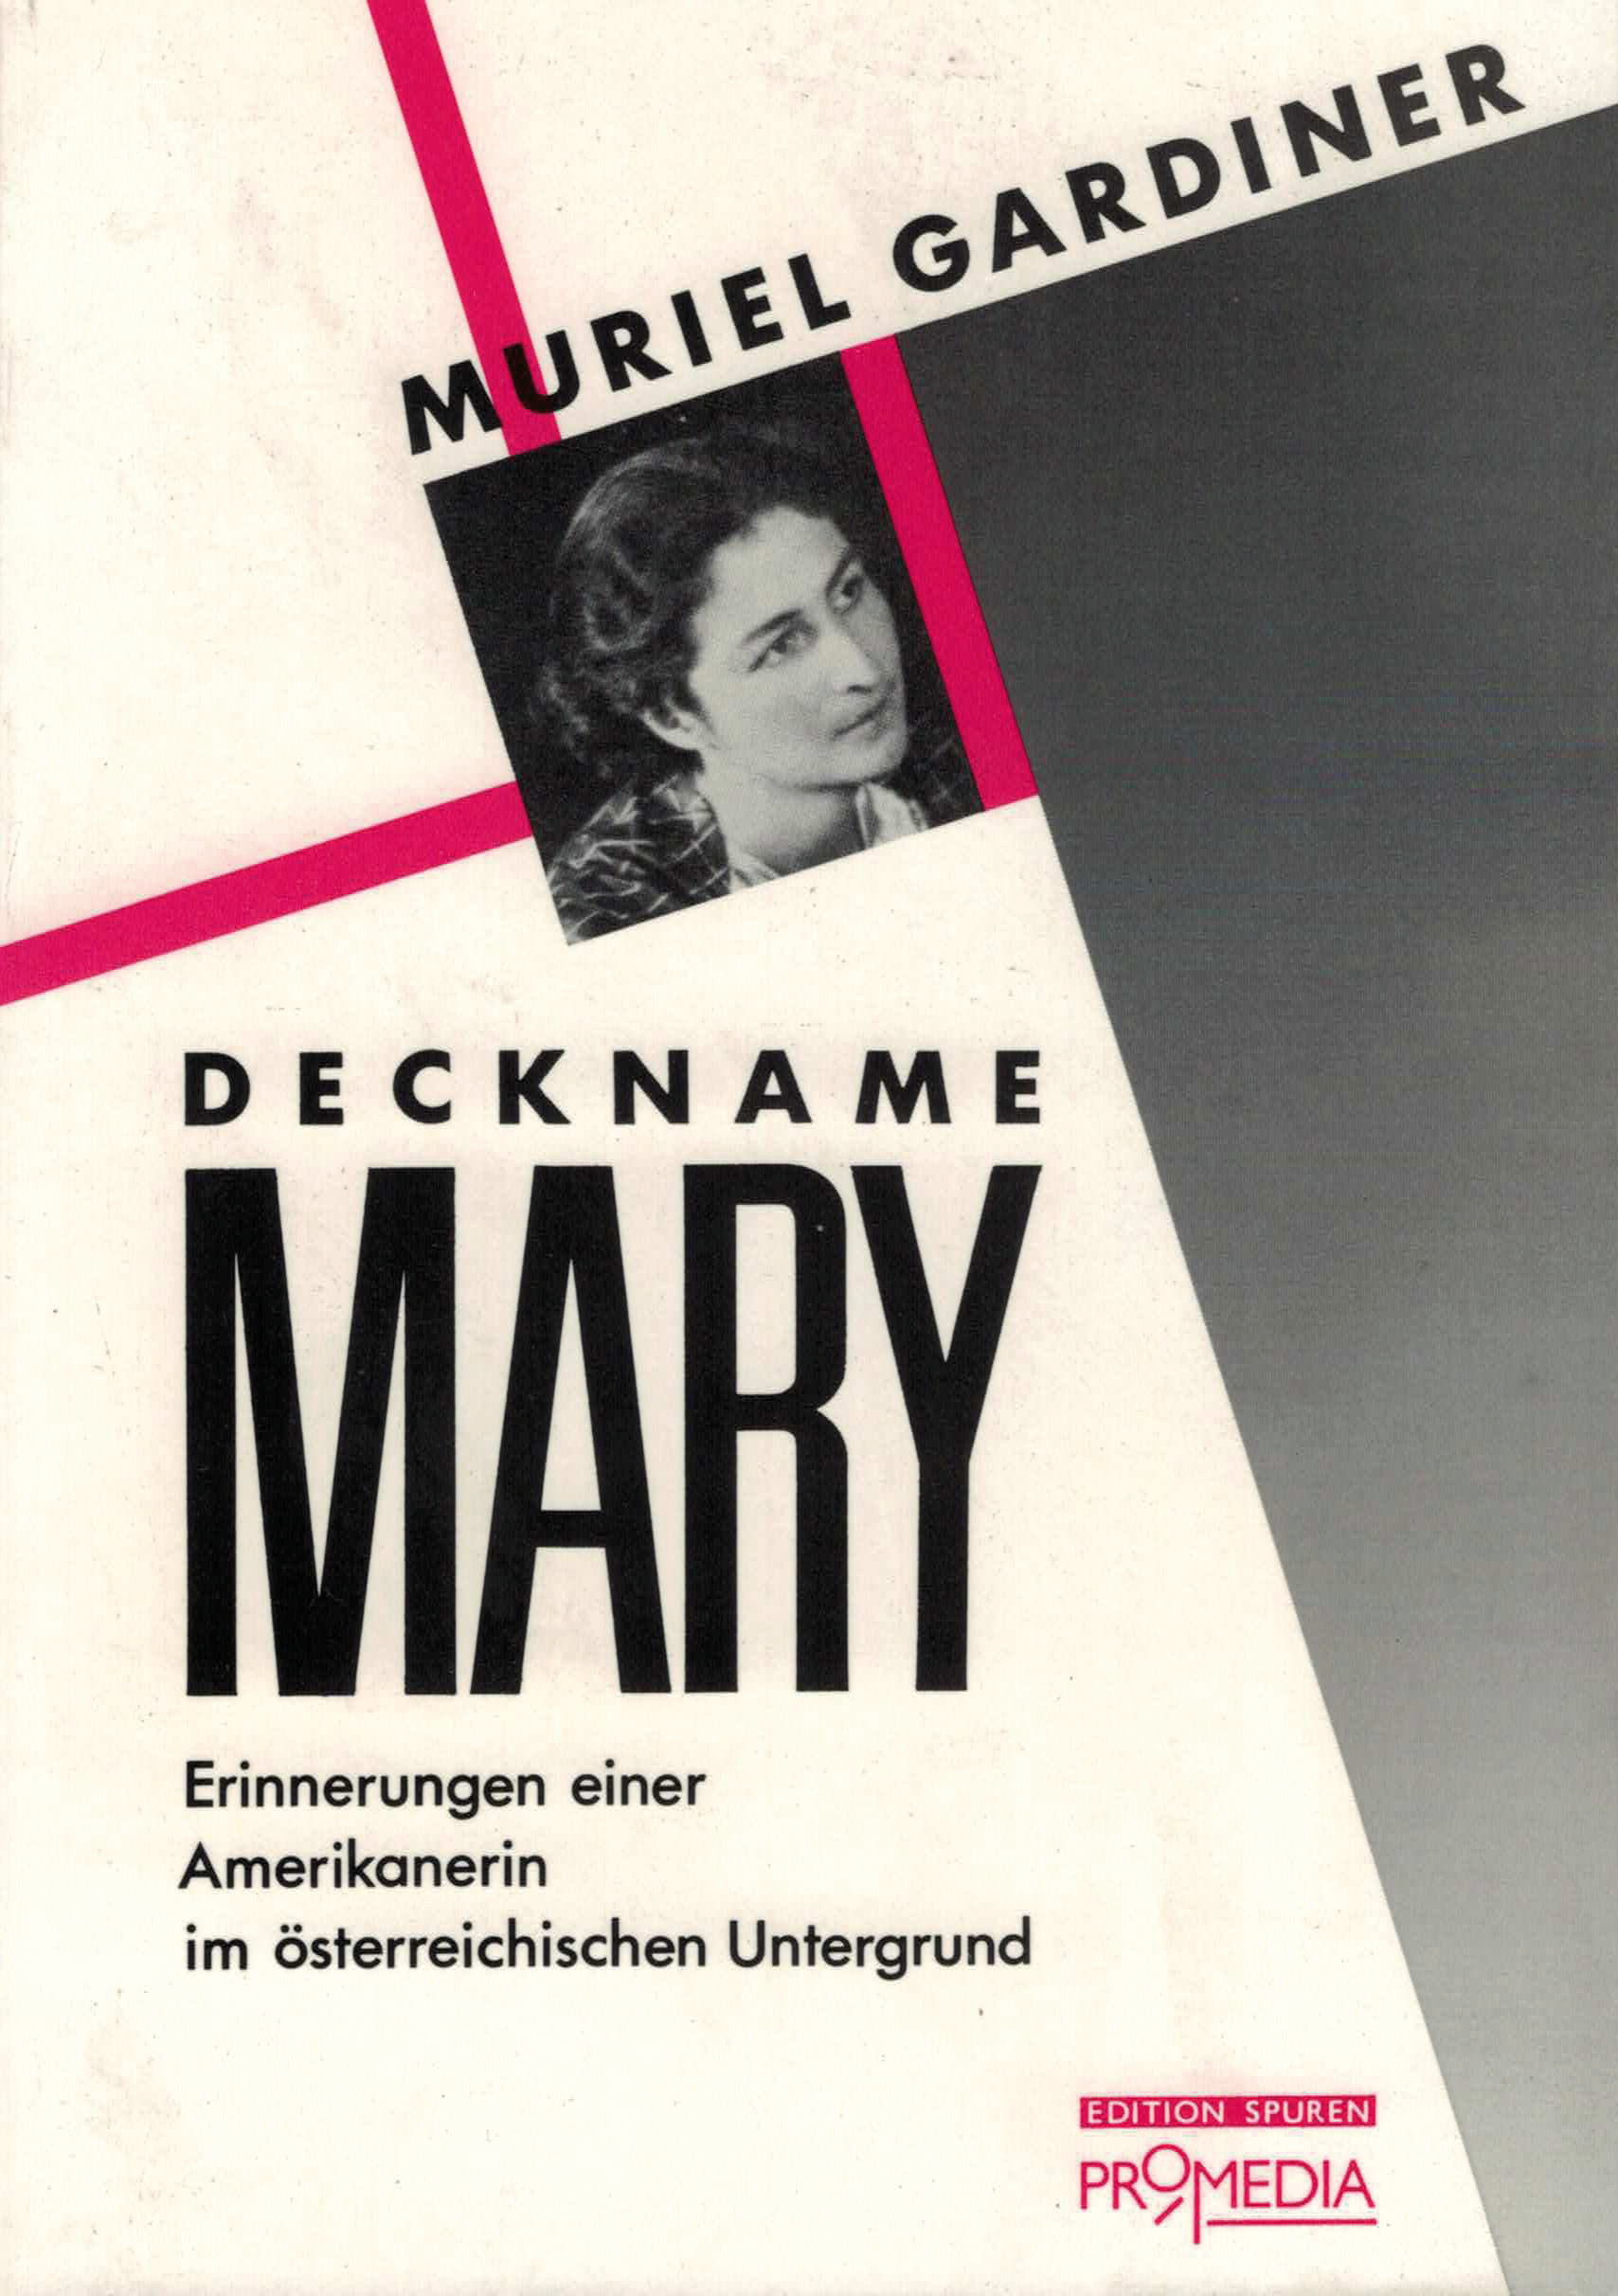 [Cover] Deckname 'Mary'